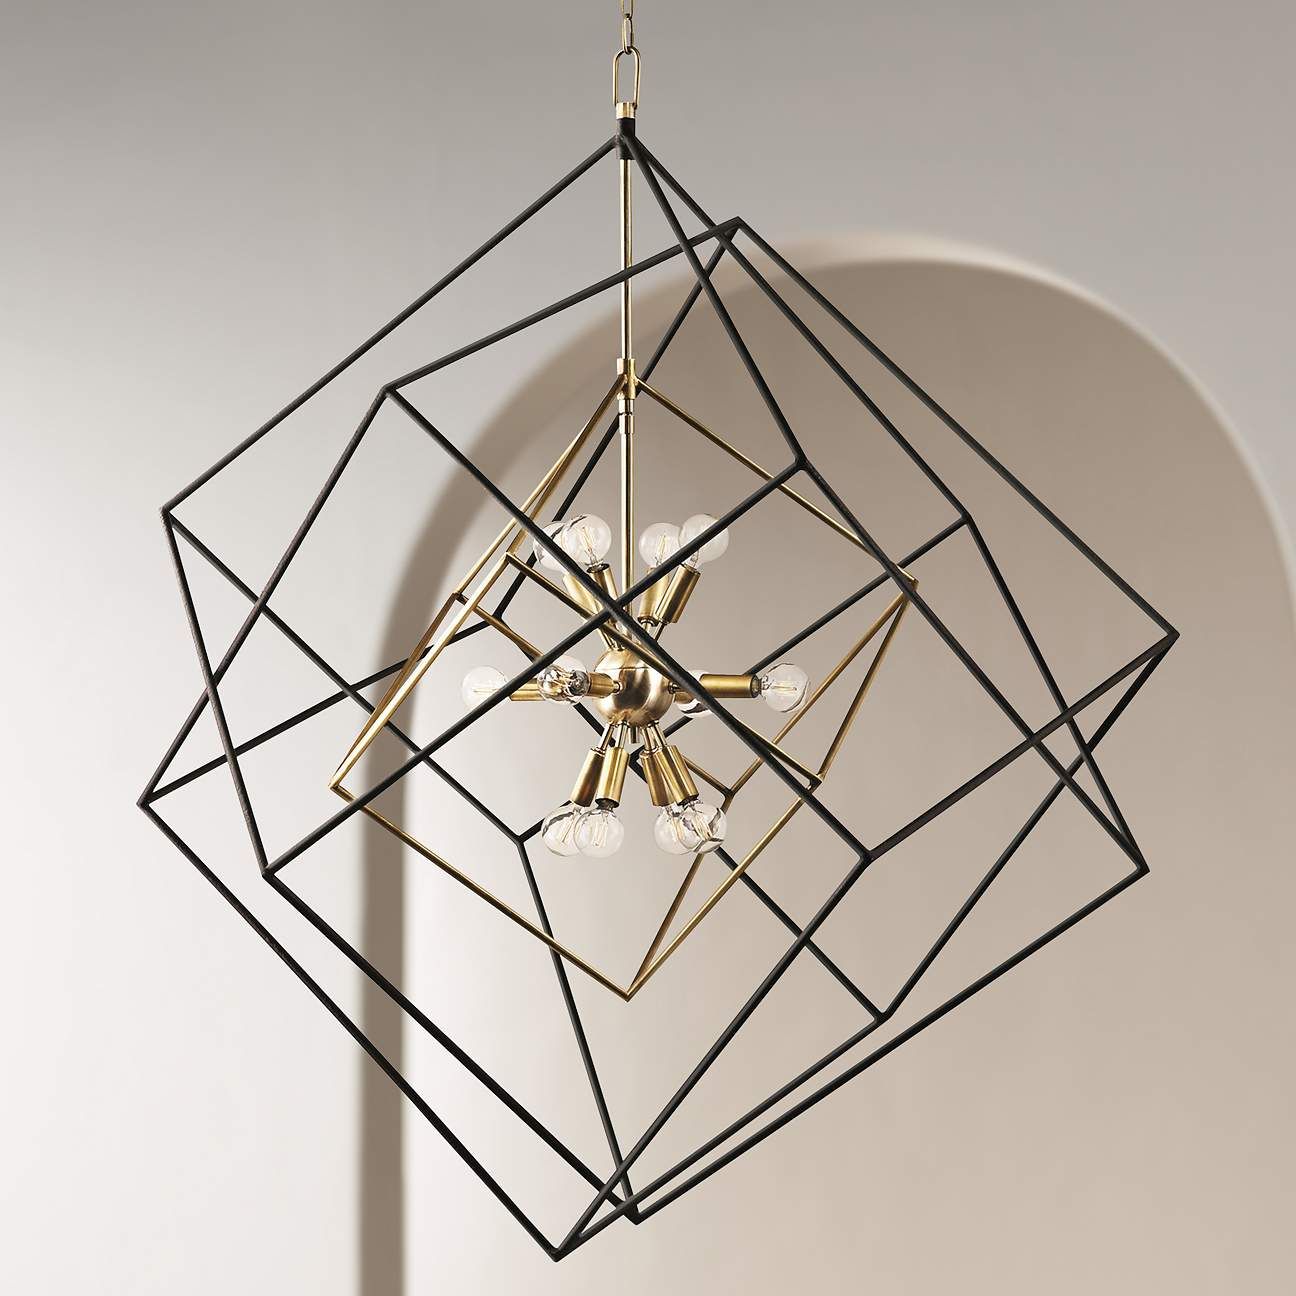 Hudson Valley Roundout 44 3/4" High Aged Brass Modern Pendant Light | Lamps Plus